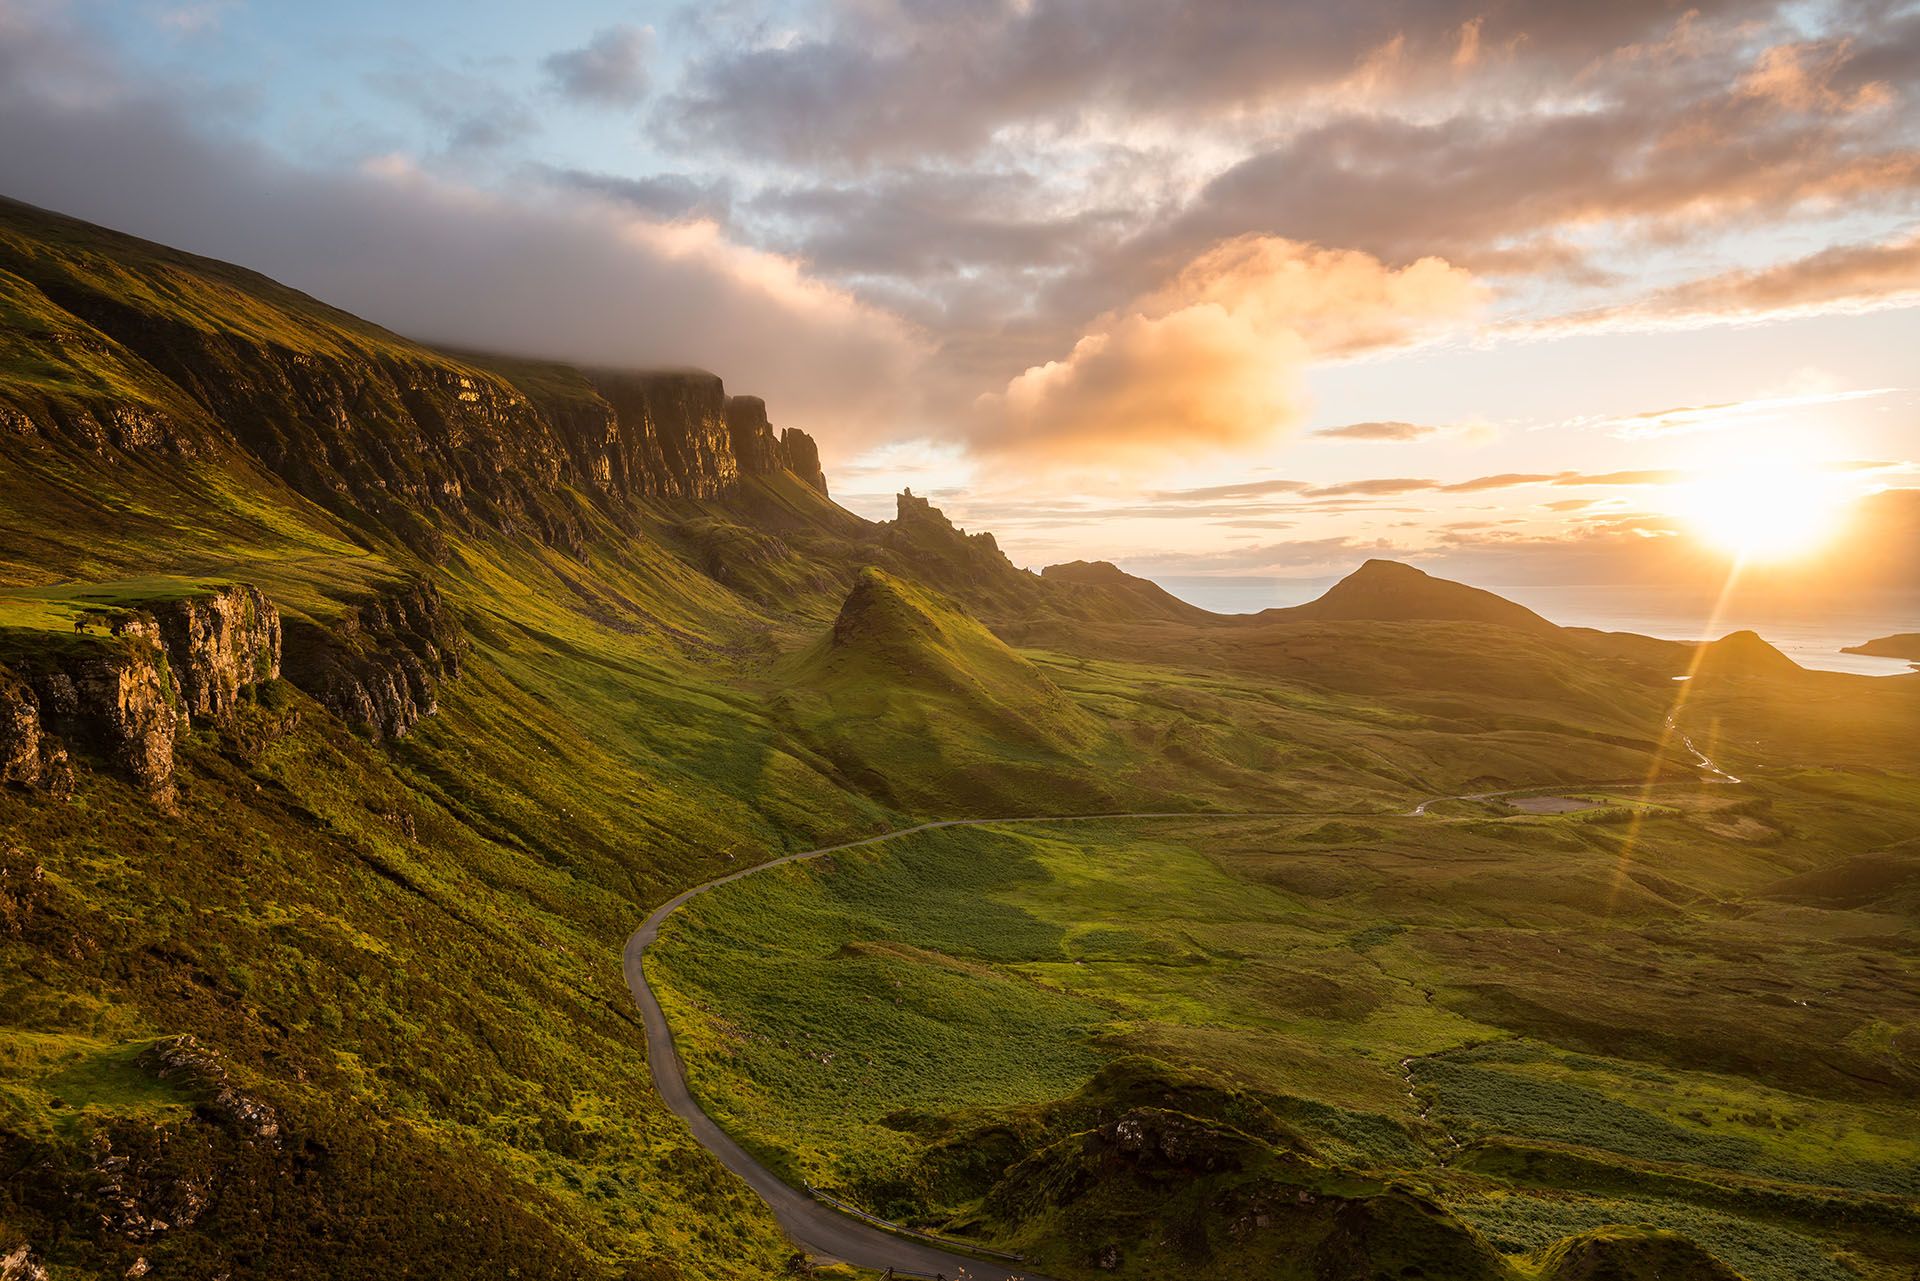 The Quiraing, Skye, Scotland © orxy/Shutterstock